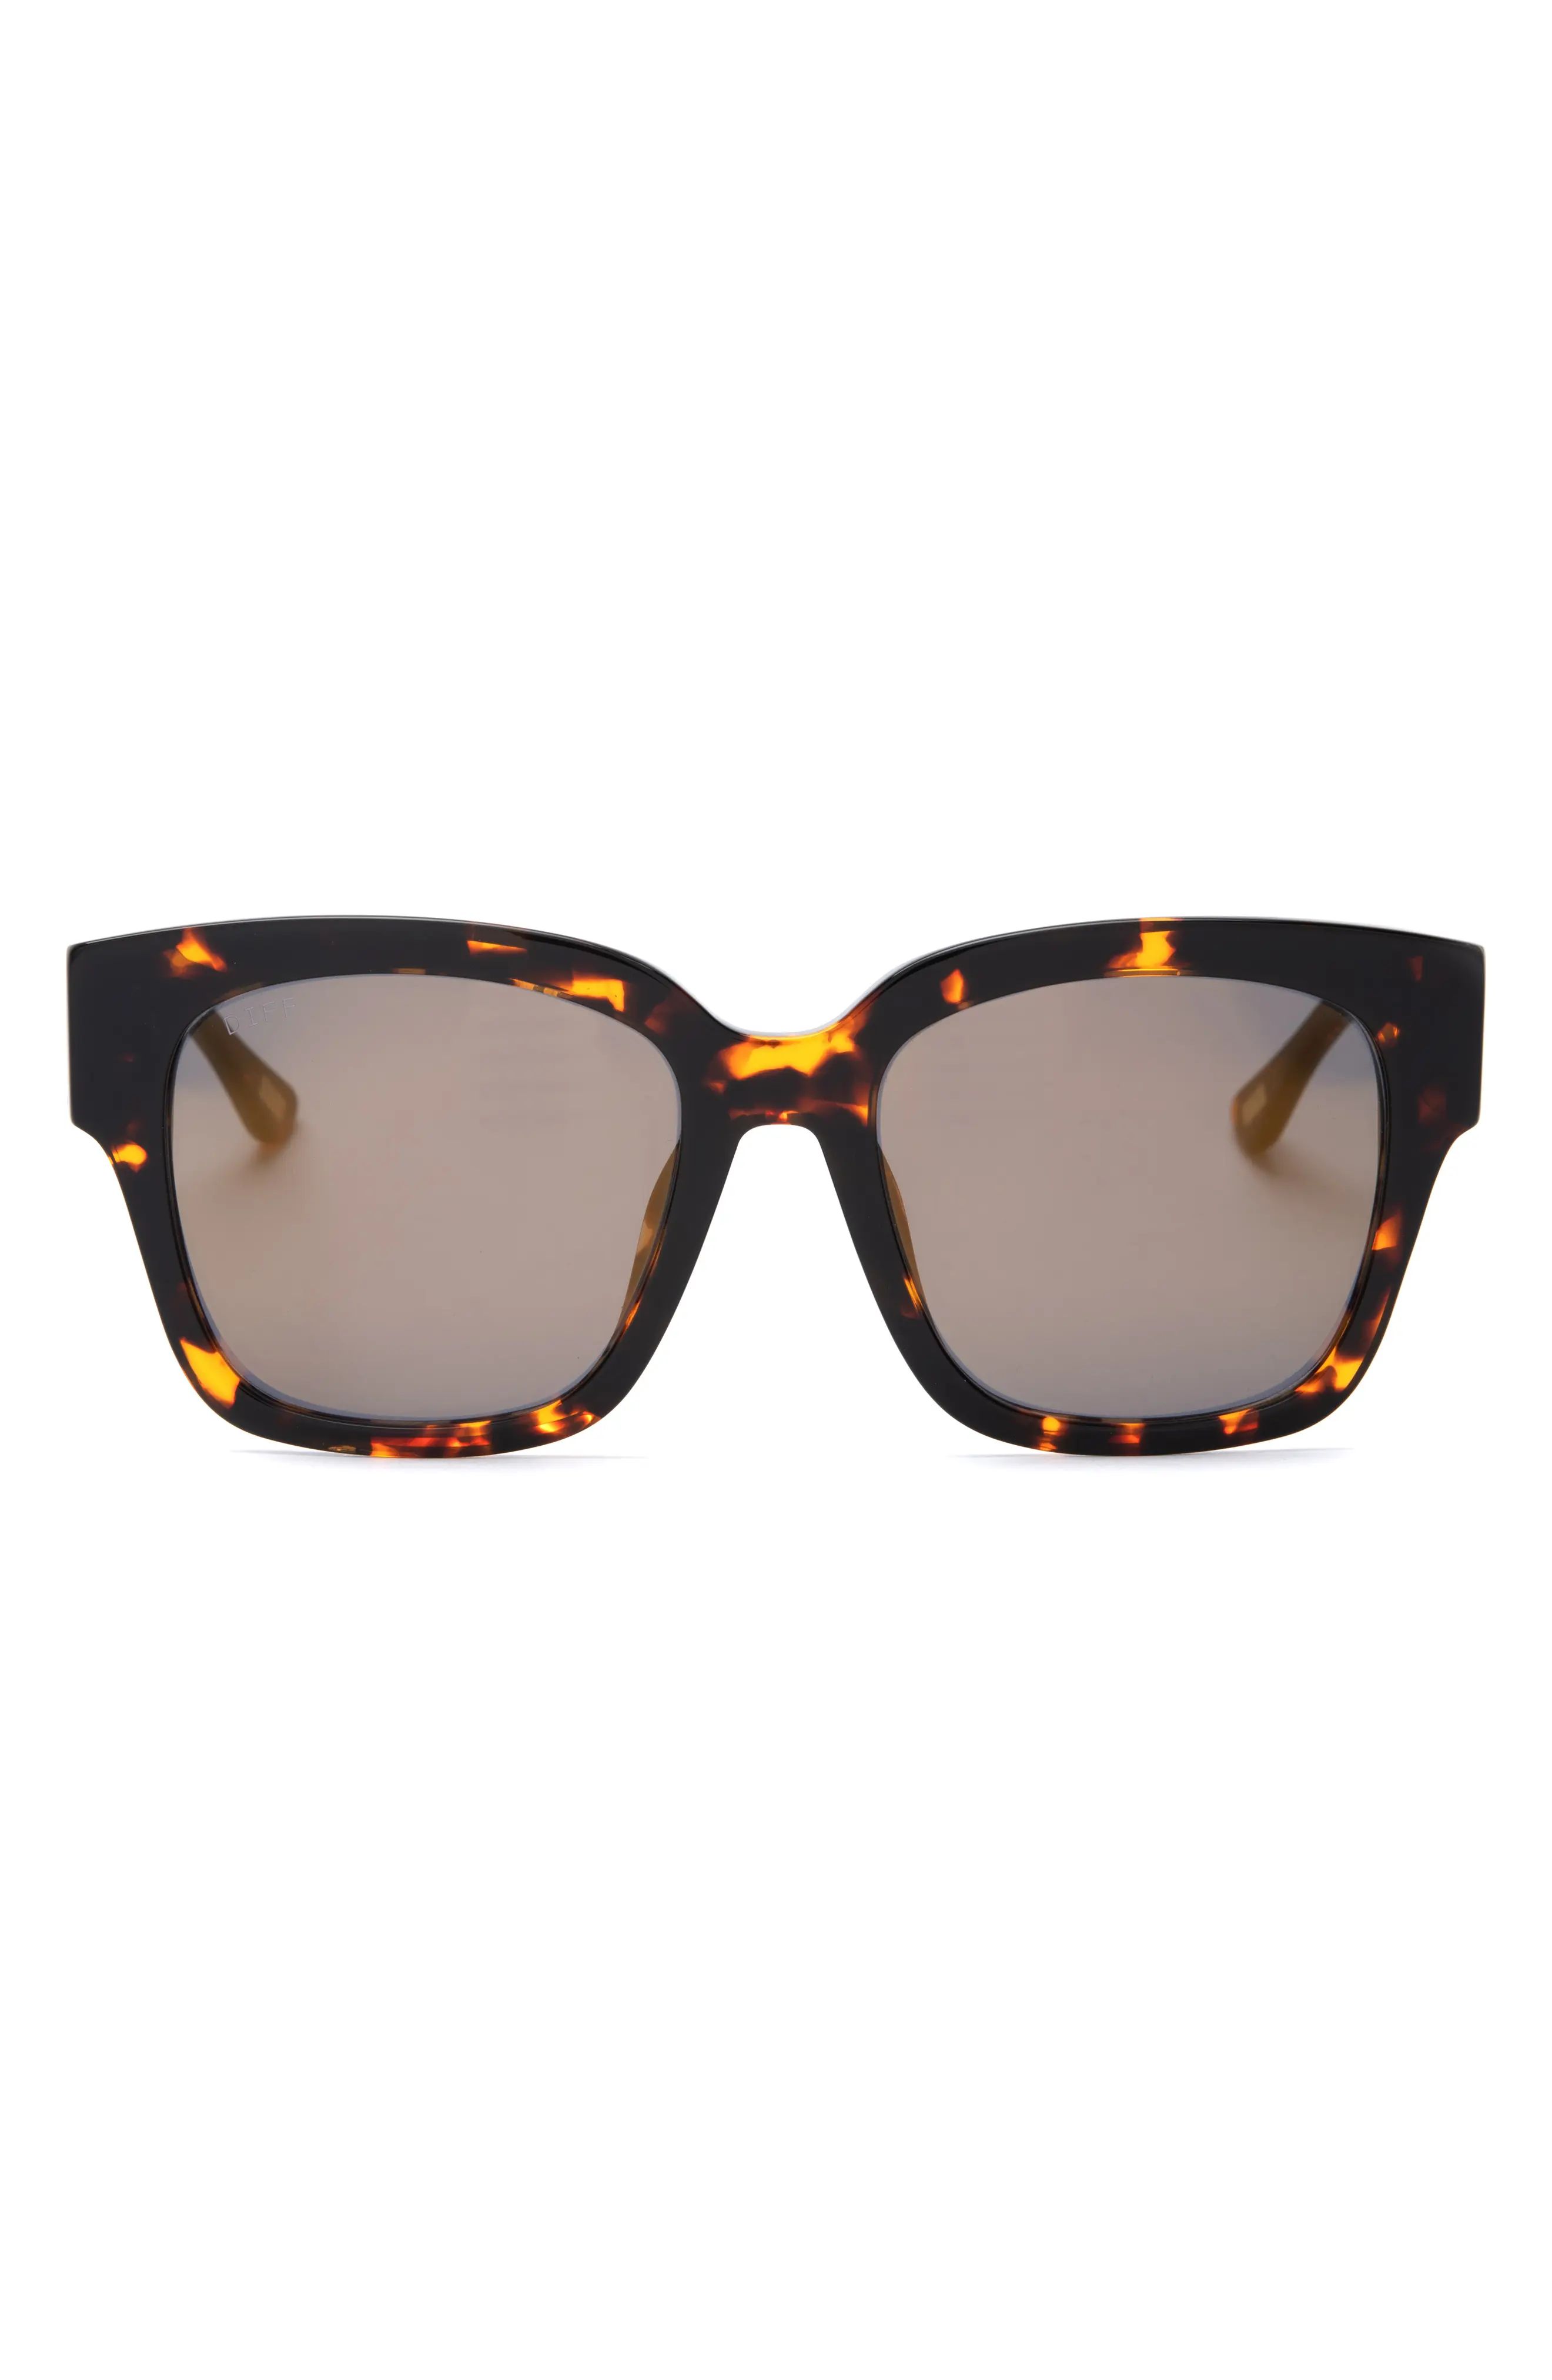 DIFF Bella II 55mm Polarized Square Cat Eye Sunglasses in Dark Tortoise /Gold at Nordstrom | Nordstrom